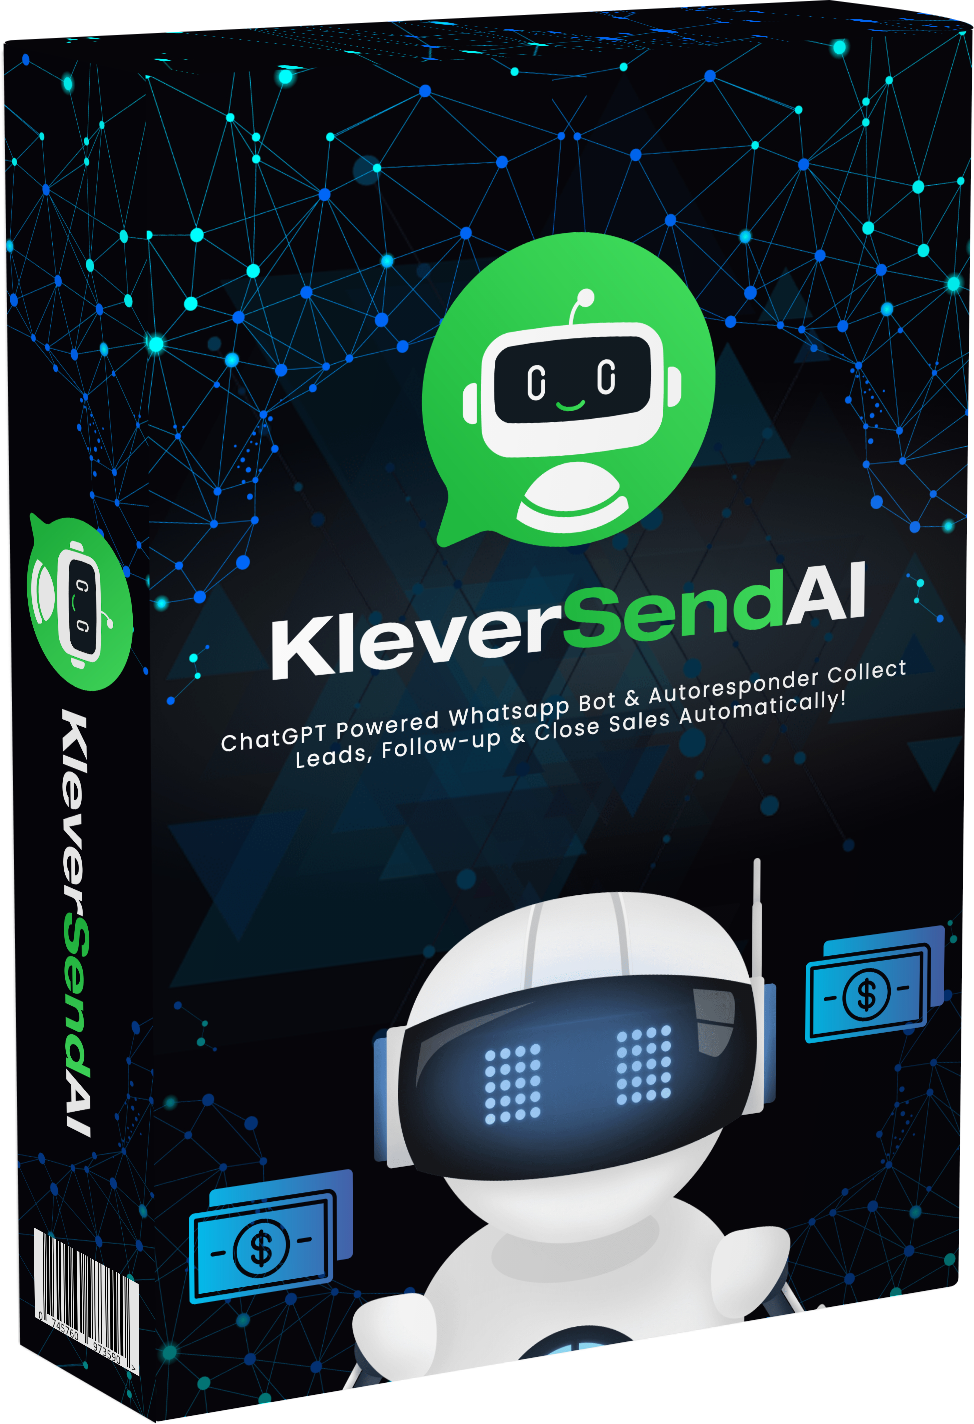 Kleversend AI Review & Bonuses – ChatGPT4 powered WhatsApp autoresponder & Bot